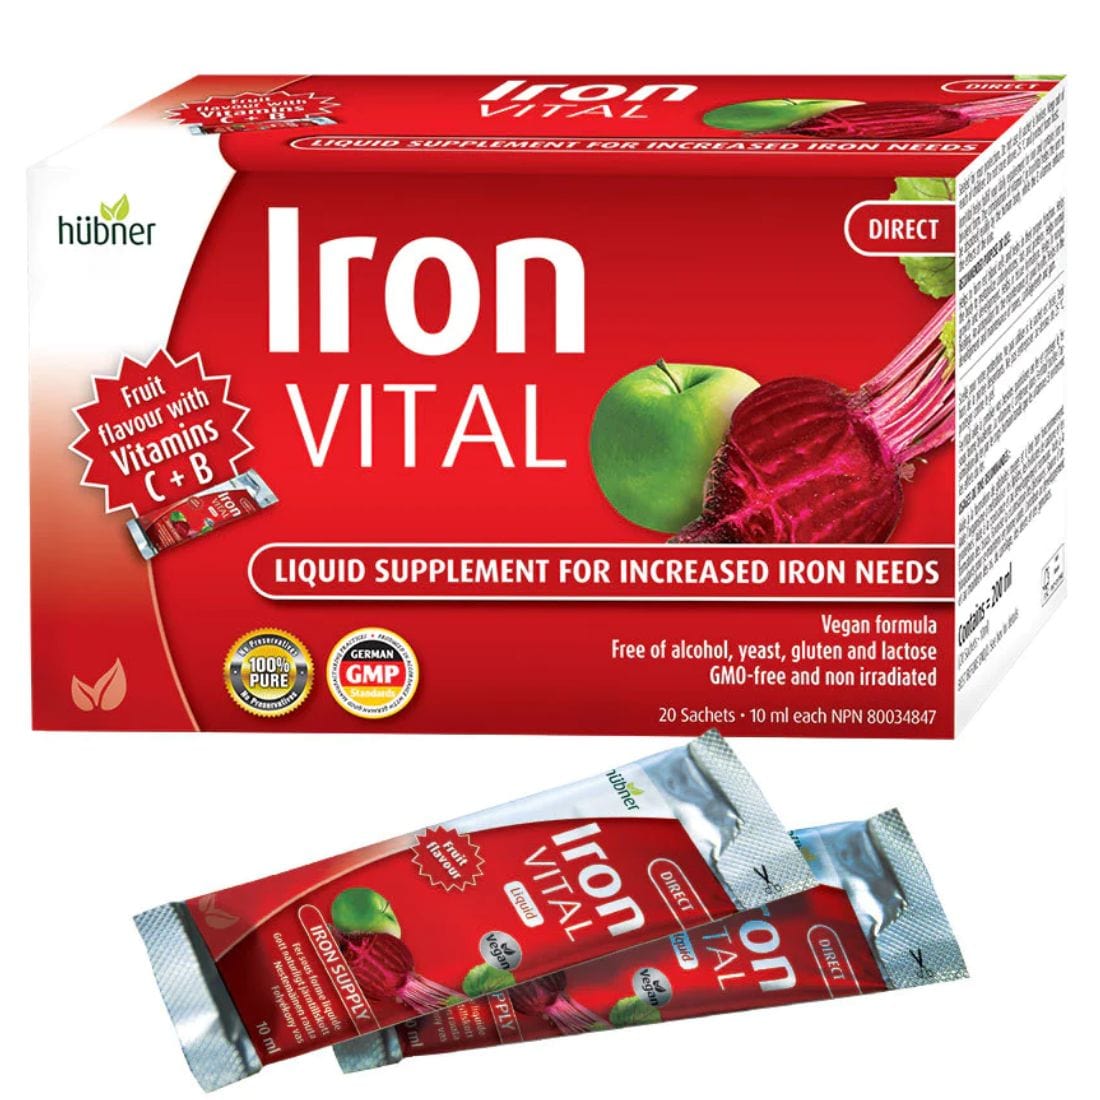 Hubner Iron Vital, Liquid Iron Supplement (Great Tasting!)